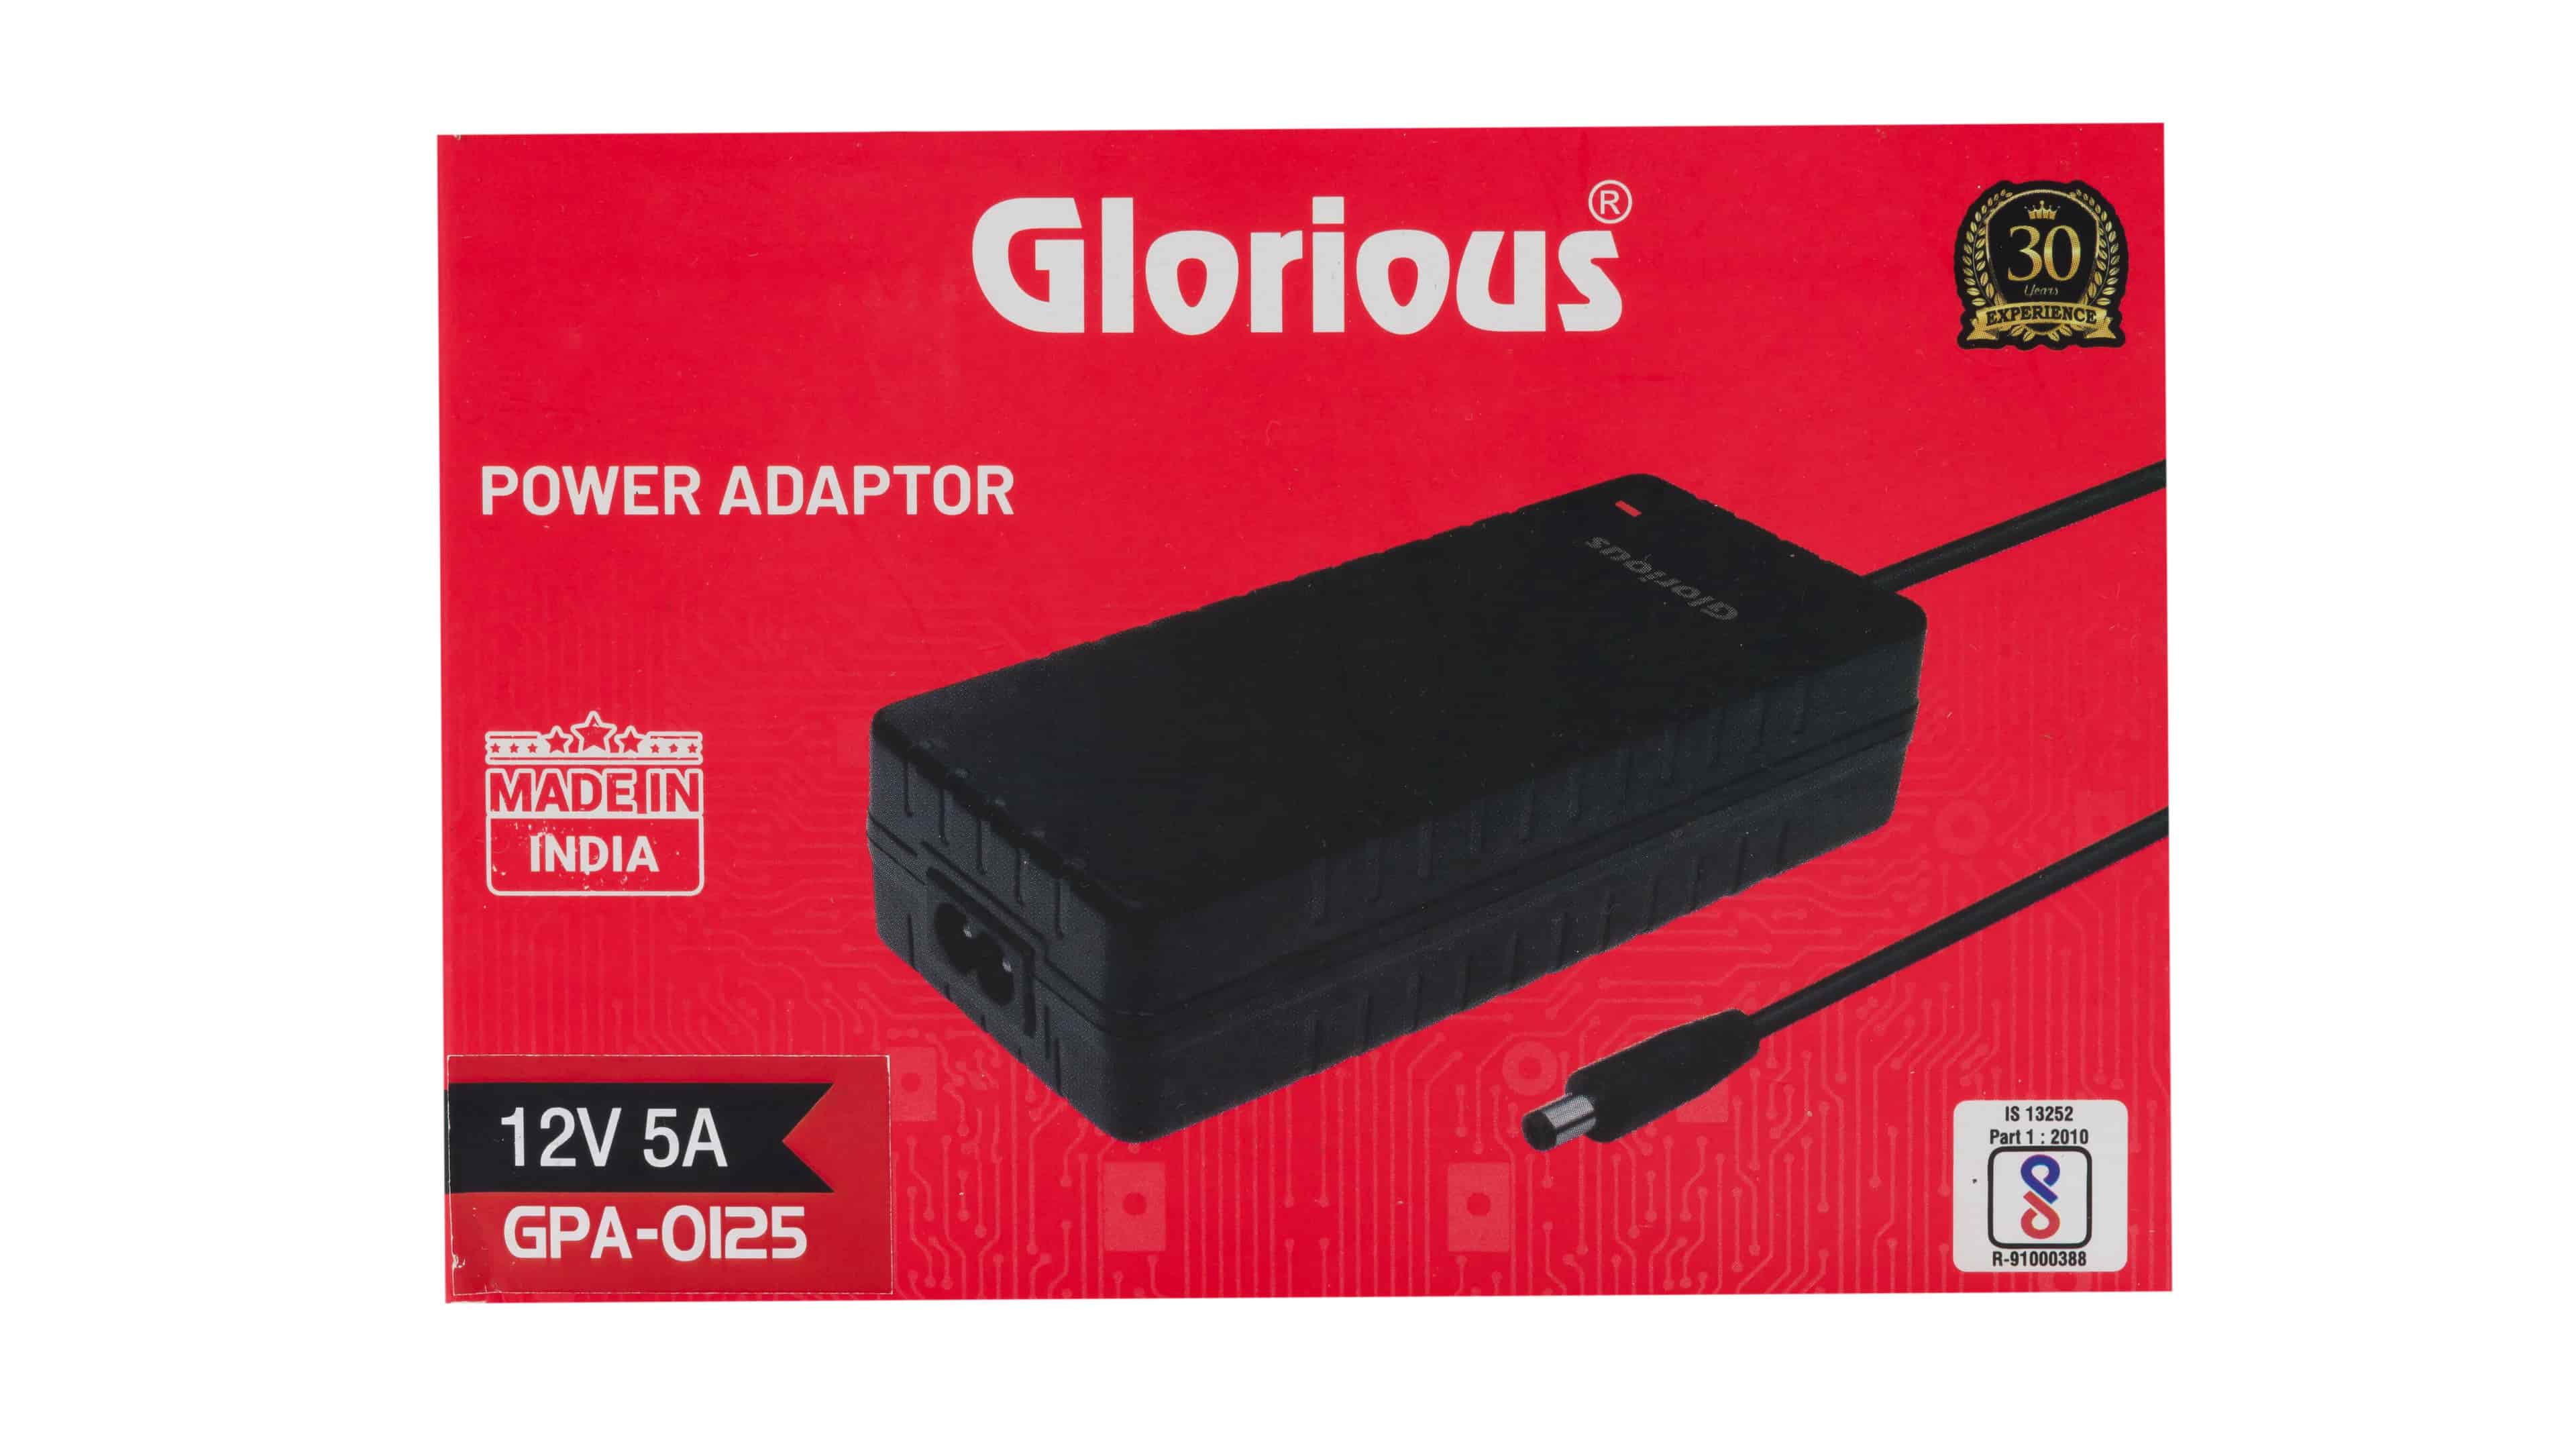 Glorious-Power-Adapter-GPA-0125-DC-12V-5A-Max-image_1